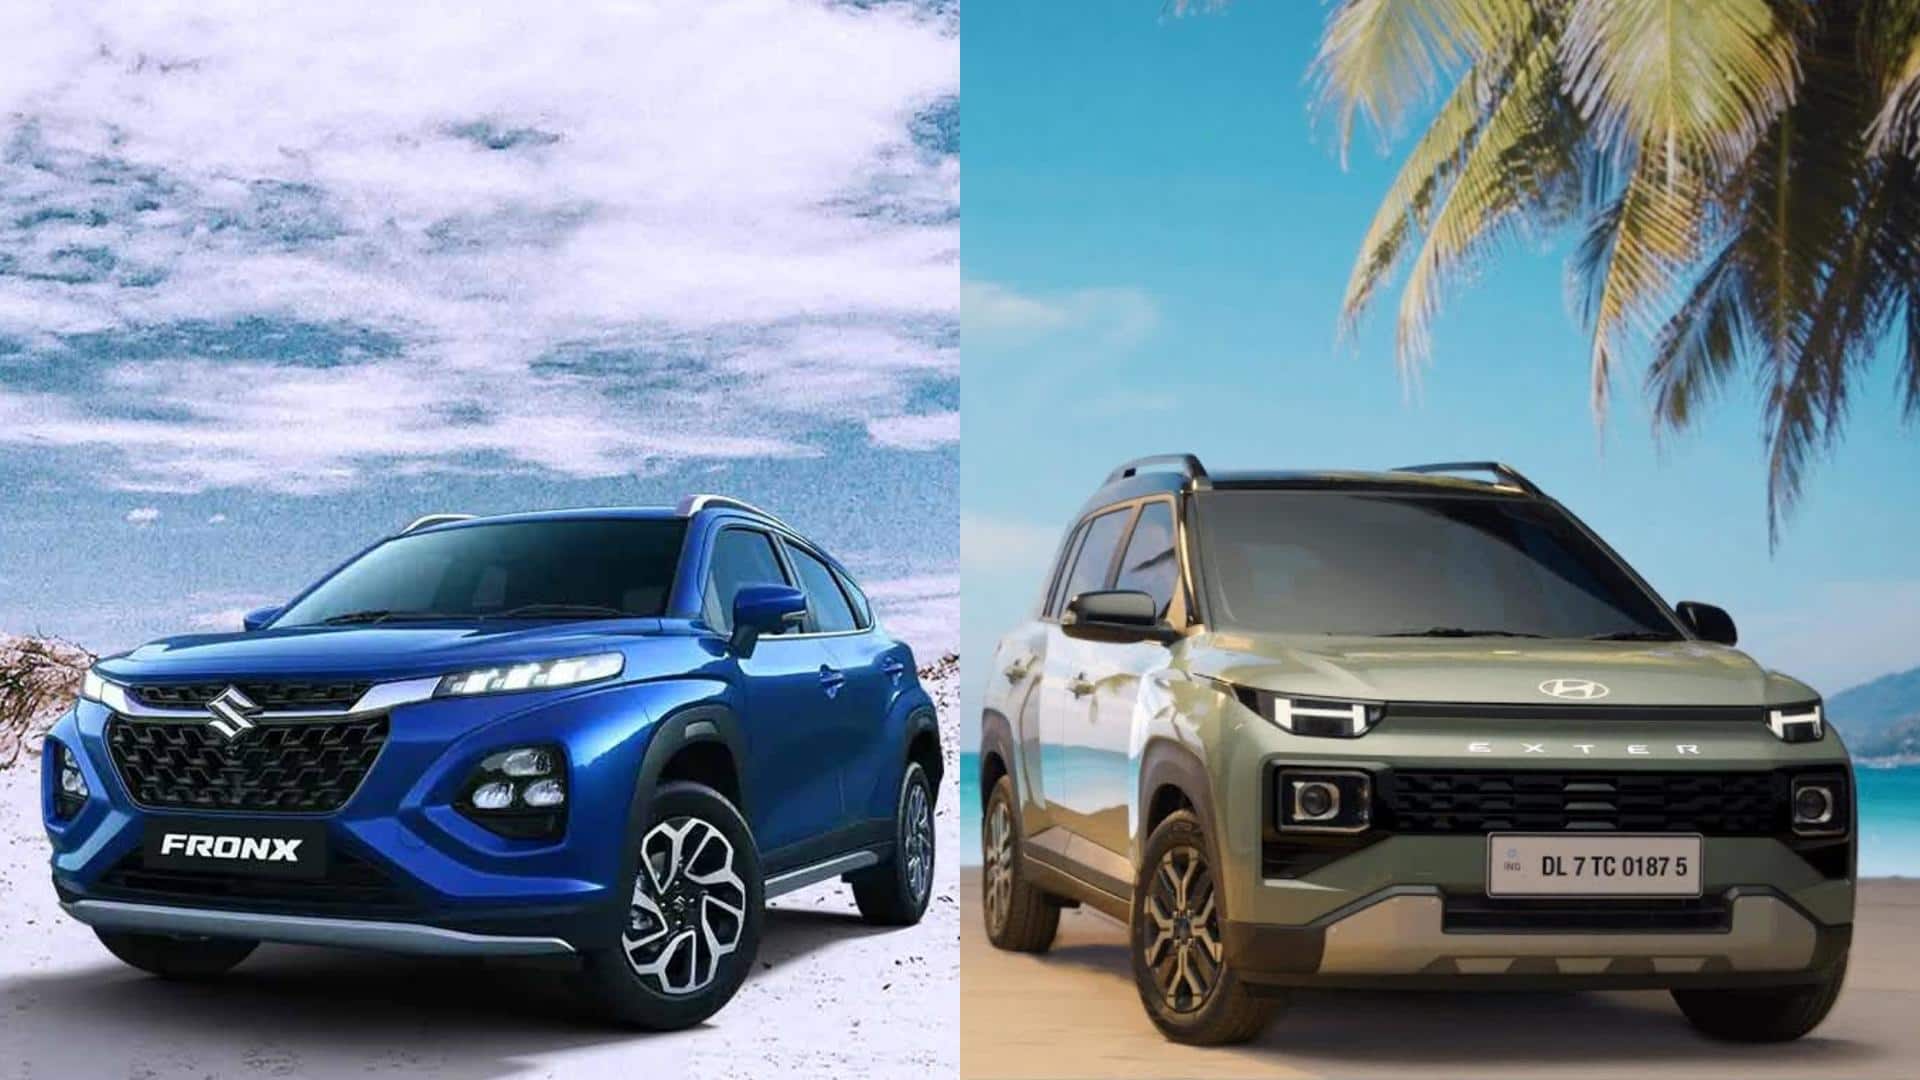 Hyundai EXTER v/s Maruti Suzuki Fronx: Which is better